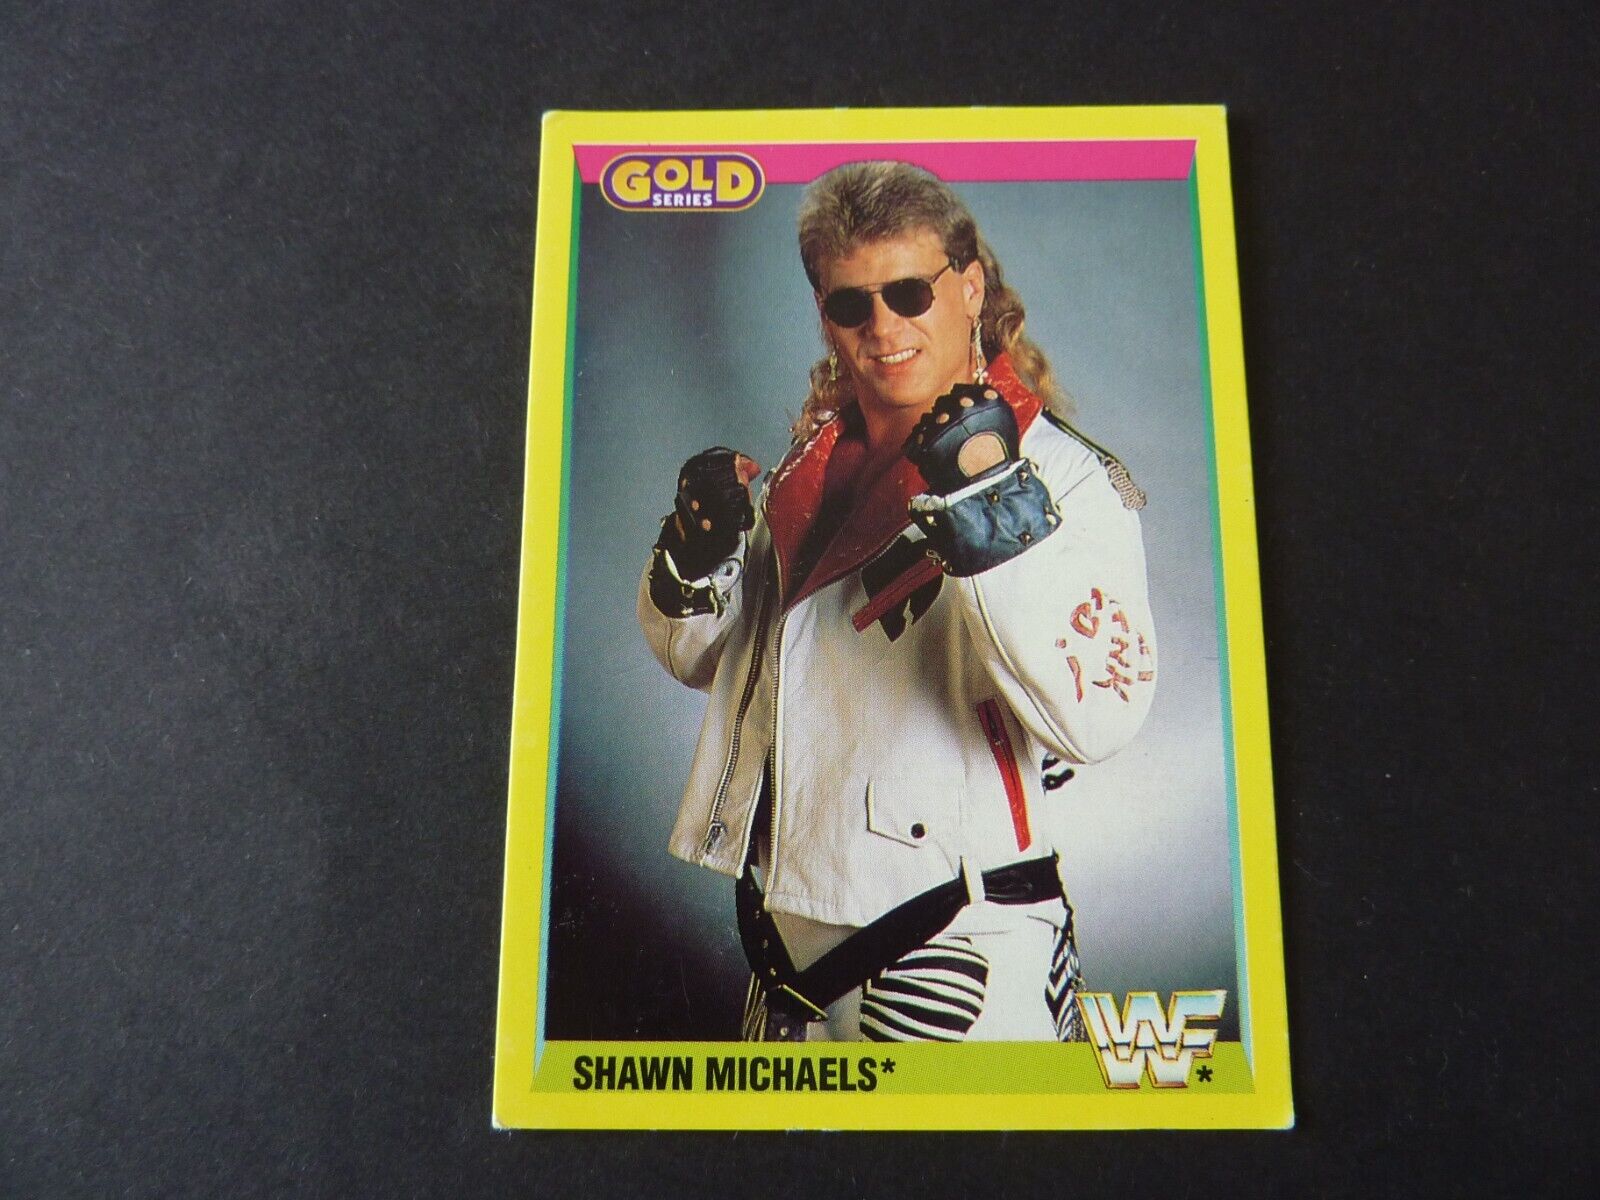 Merlin - Shawn Michaels - WWF Gold Series Wrestling Card - 1992 - VGC No 65